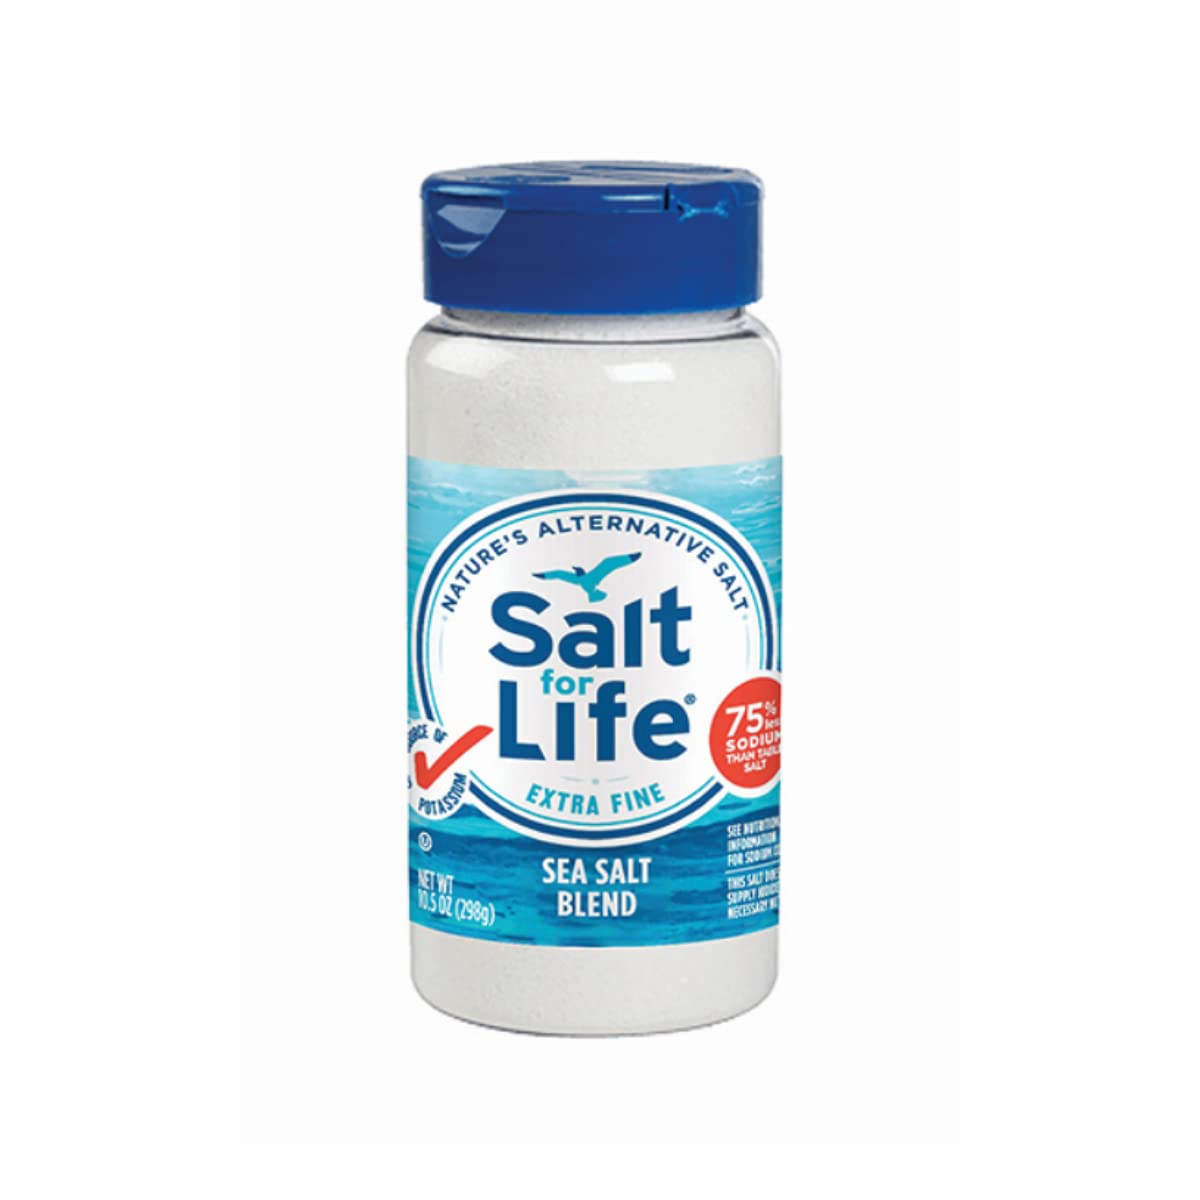 Salt For Life Salt Substitute - 10.5 oz. - Tasty Low Sodium Salt &  Potassium Salt Substitute for